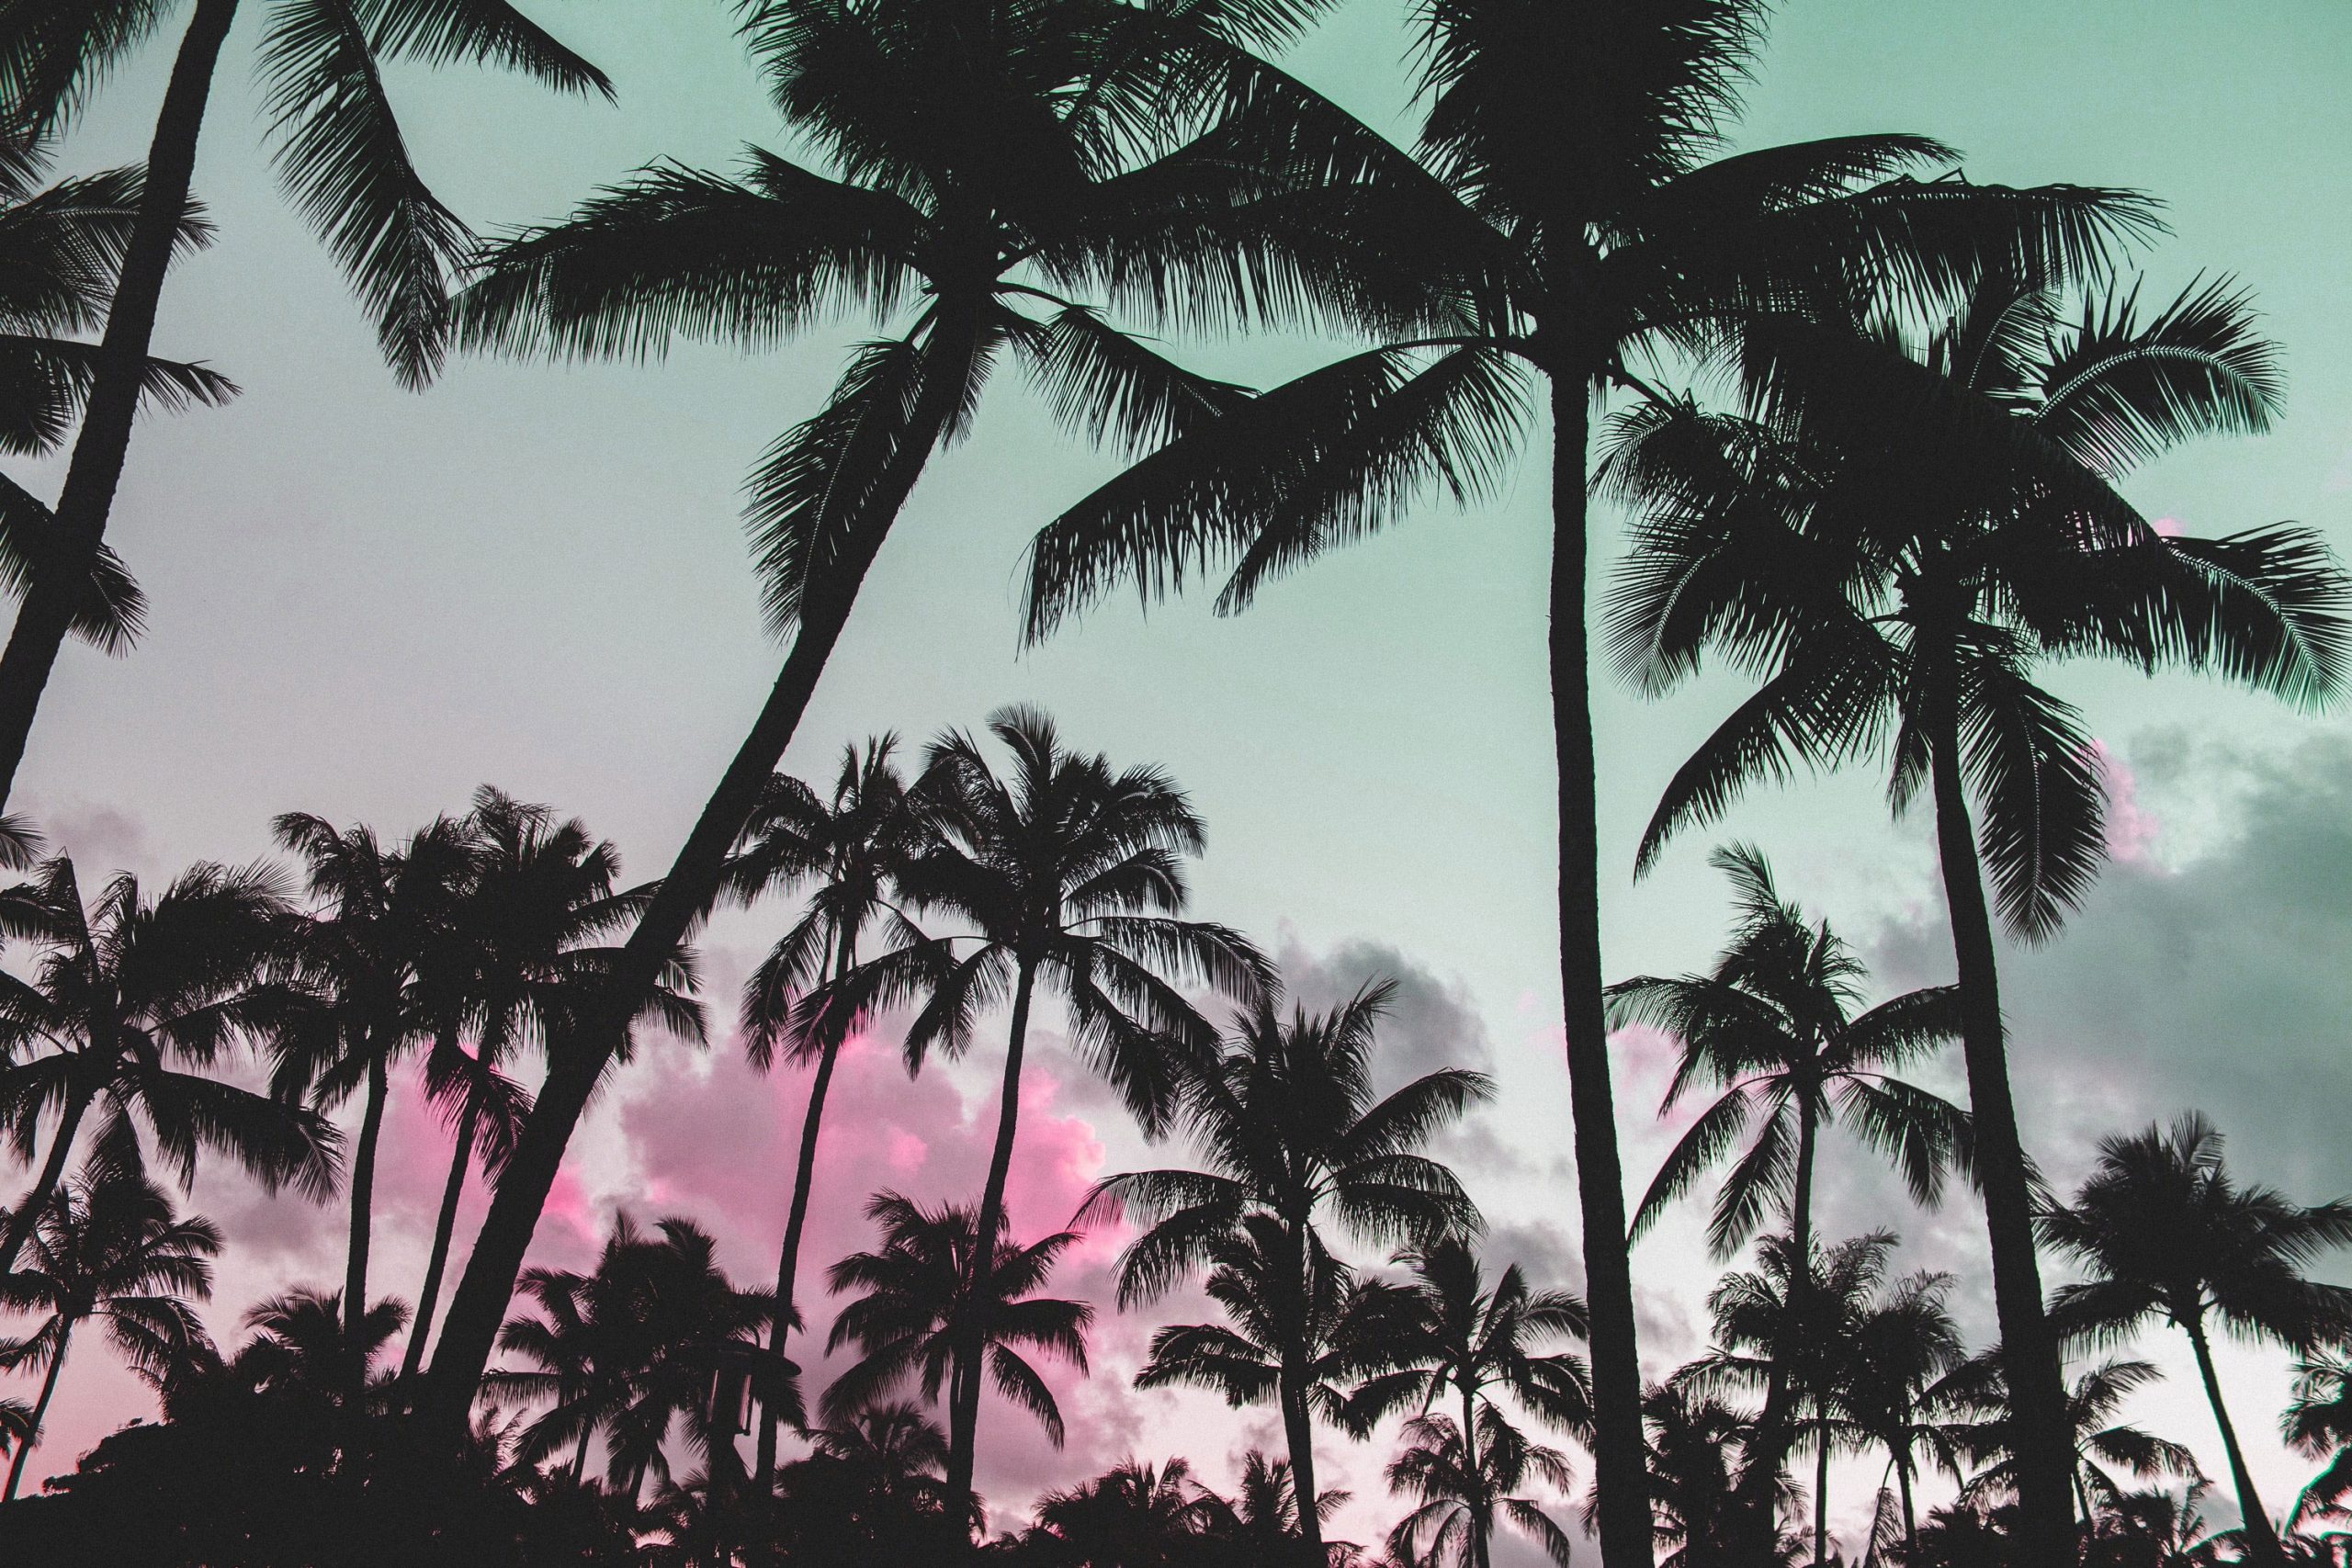 Glitch art wallpaper, nature, vaporwave, palm trees, pink, silhouette